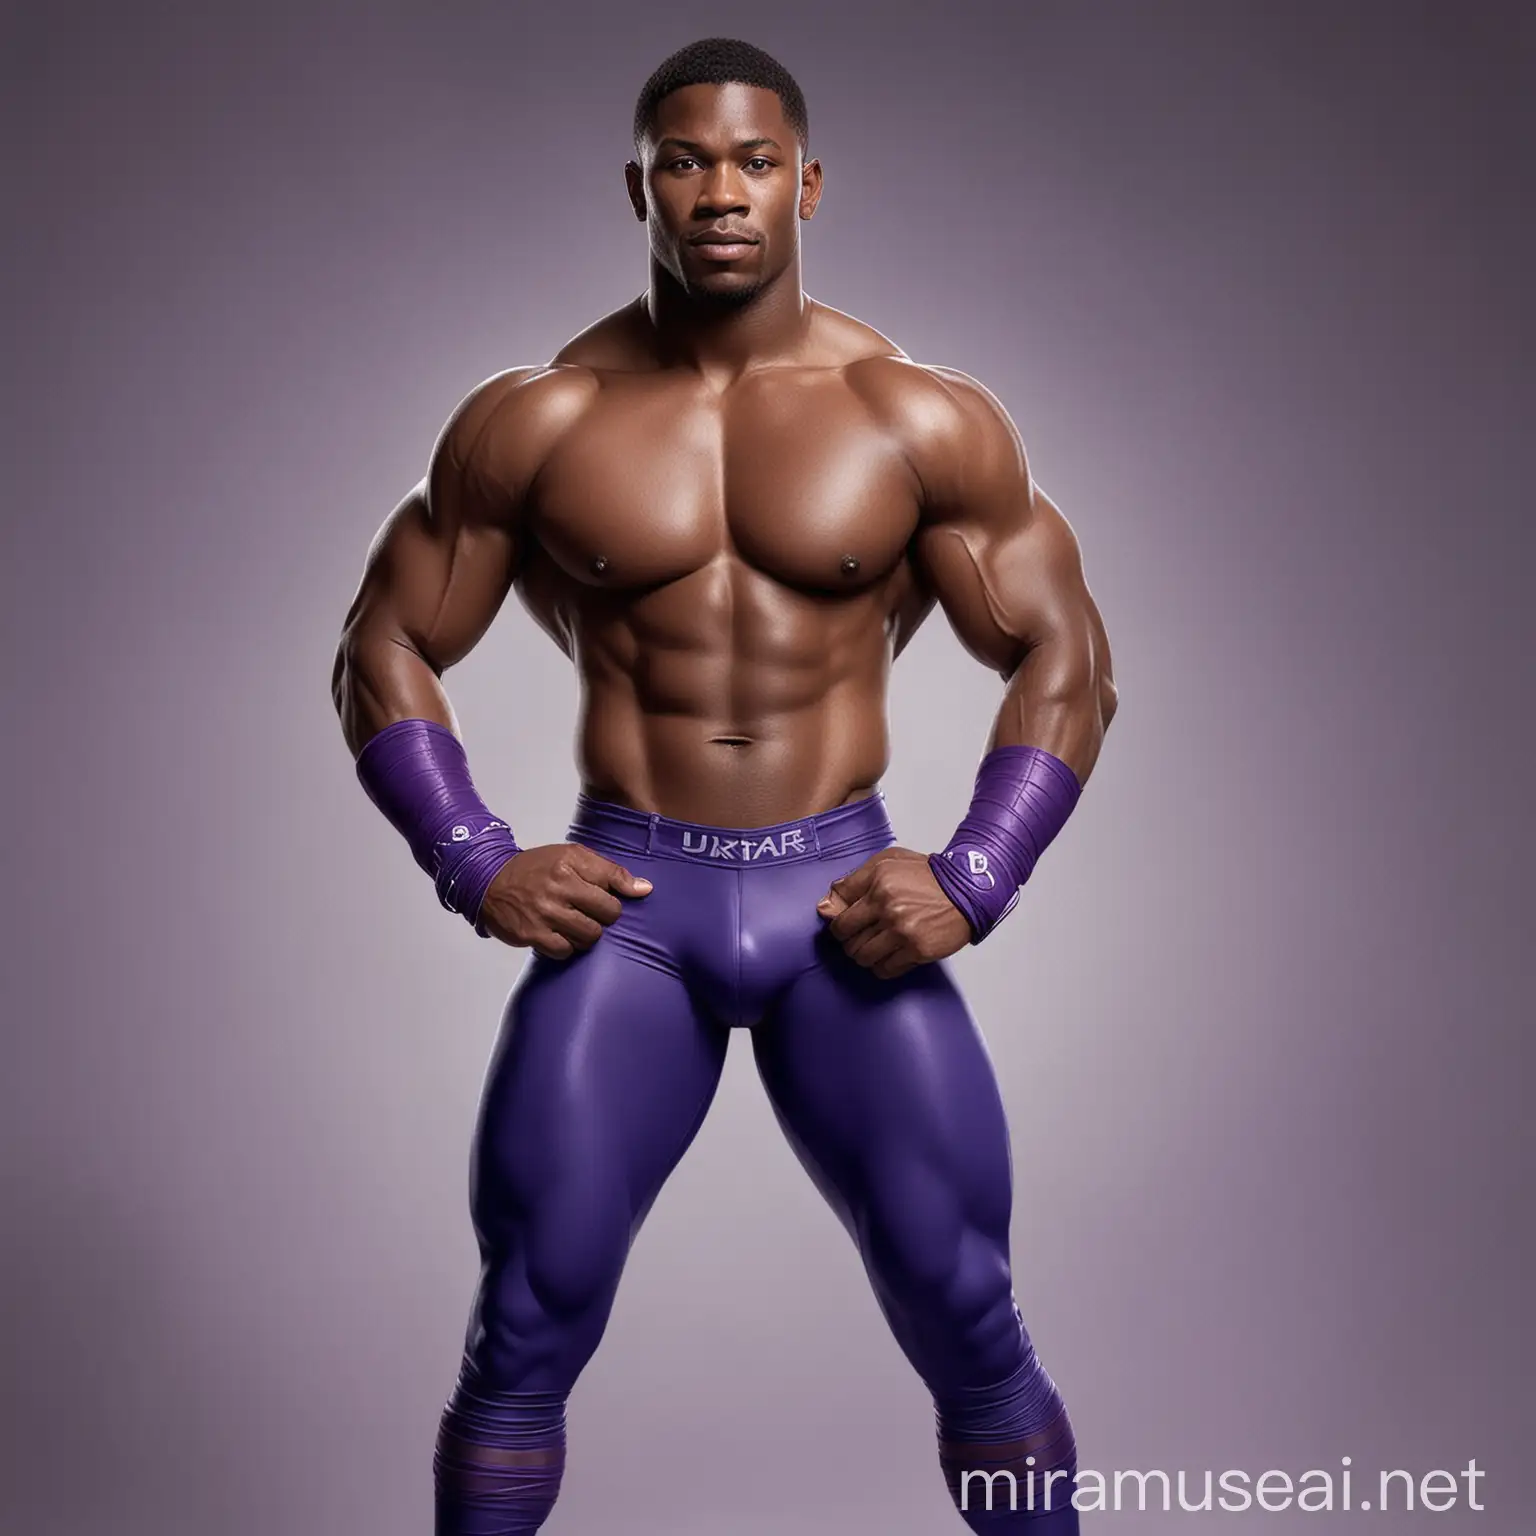 Powerful African American Wrestler in Vibrant Spandex Attire